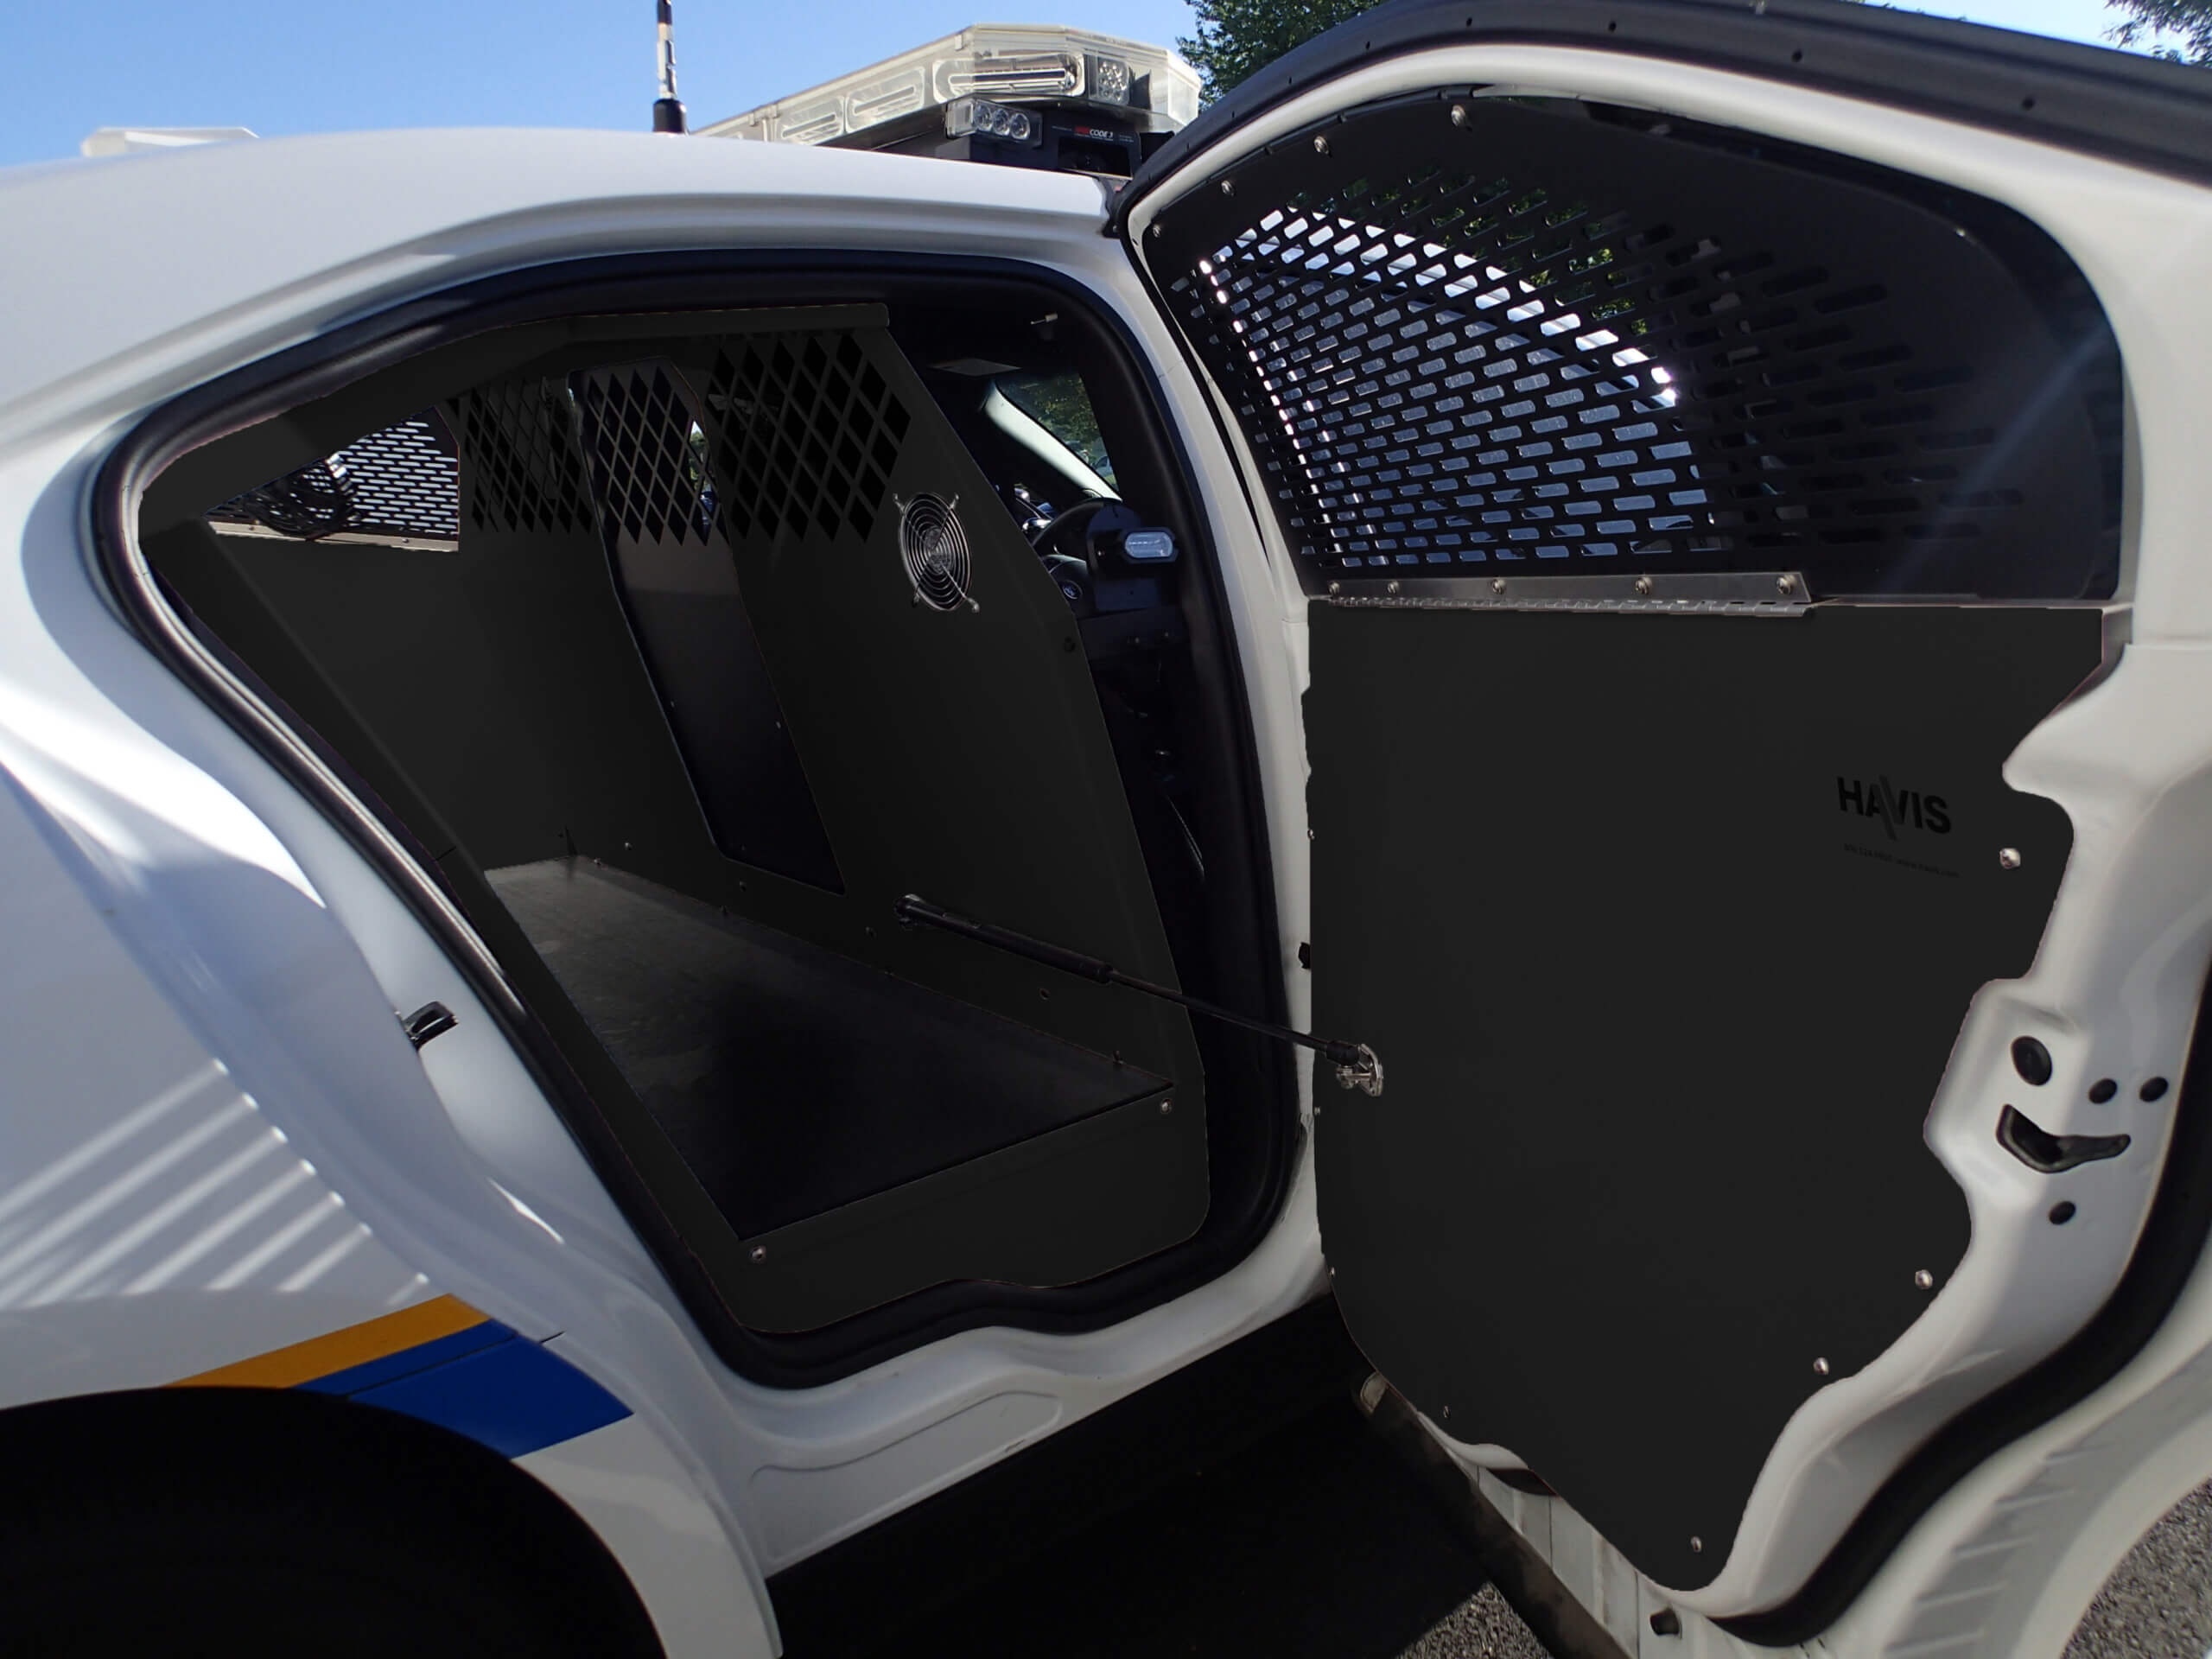 OBSOLETE – Standard K9 Transport System For 2013-2019 Ford Interceptor Sedan – Black